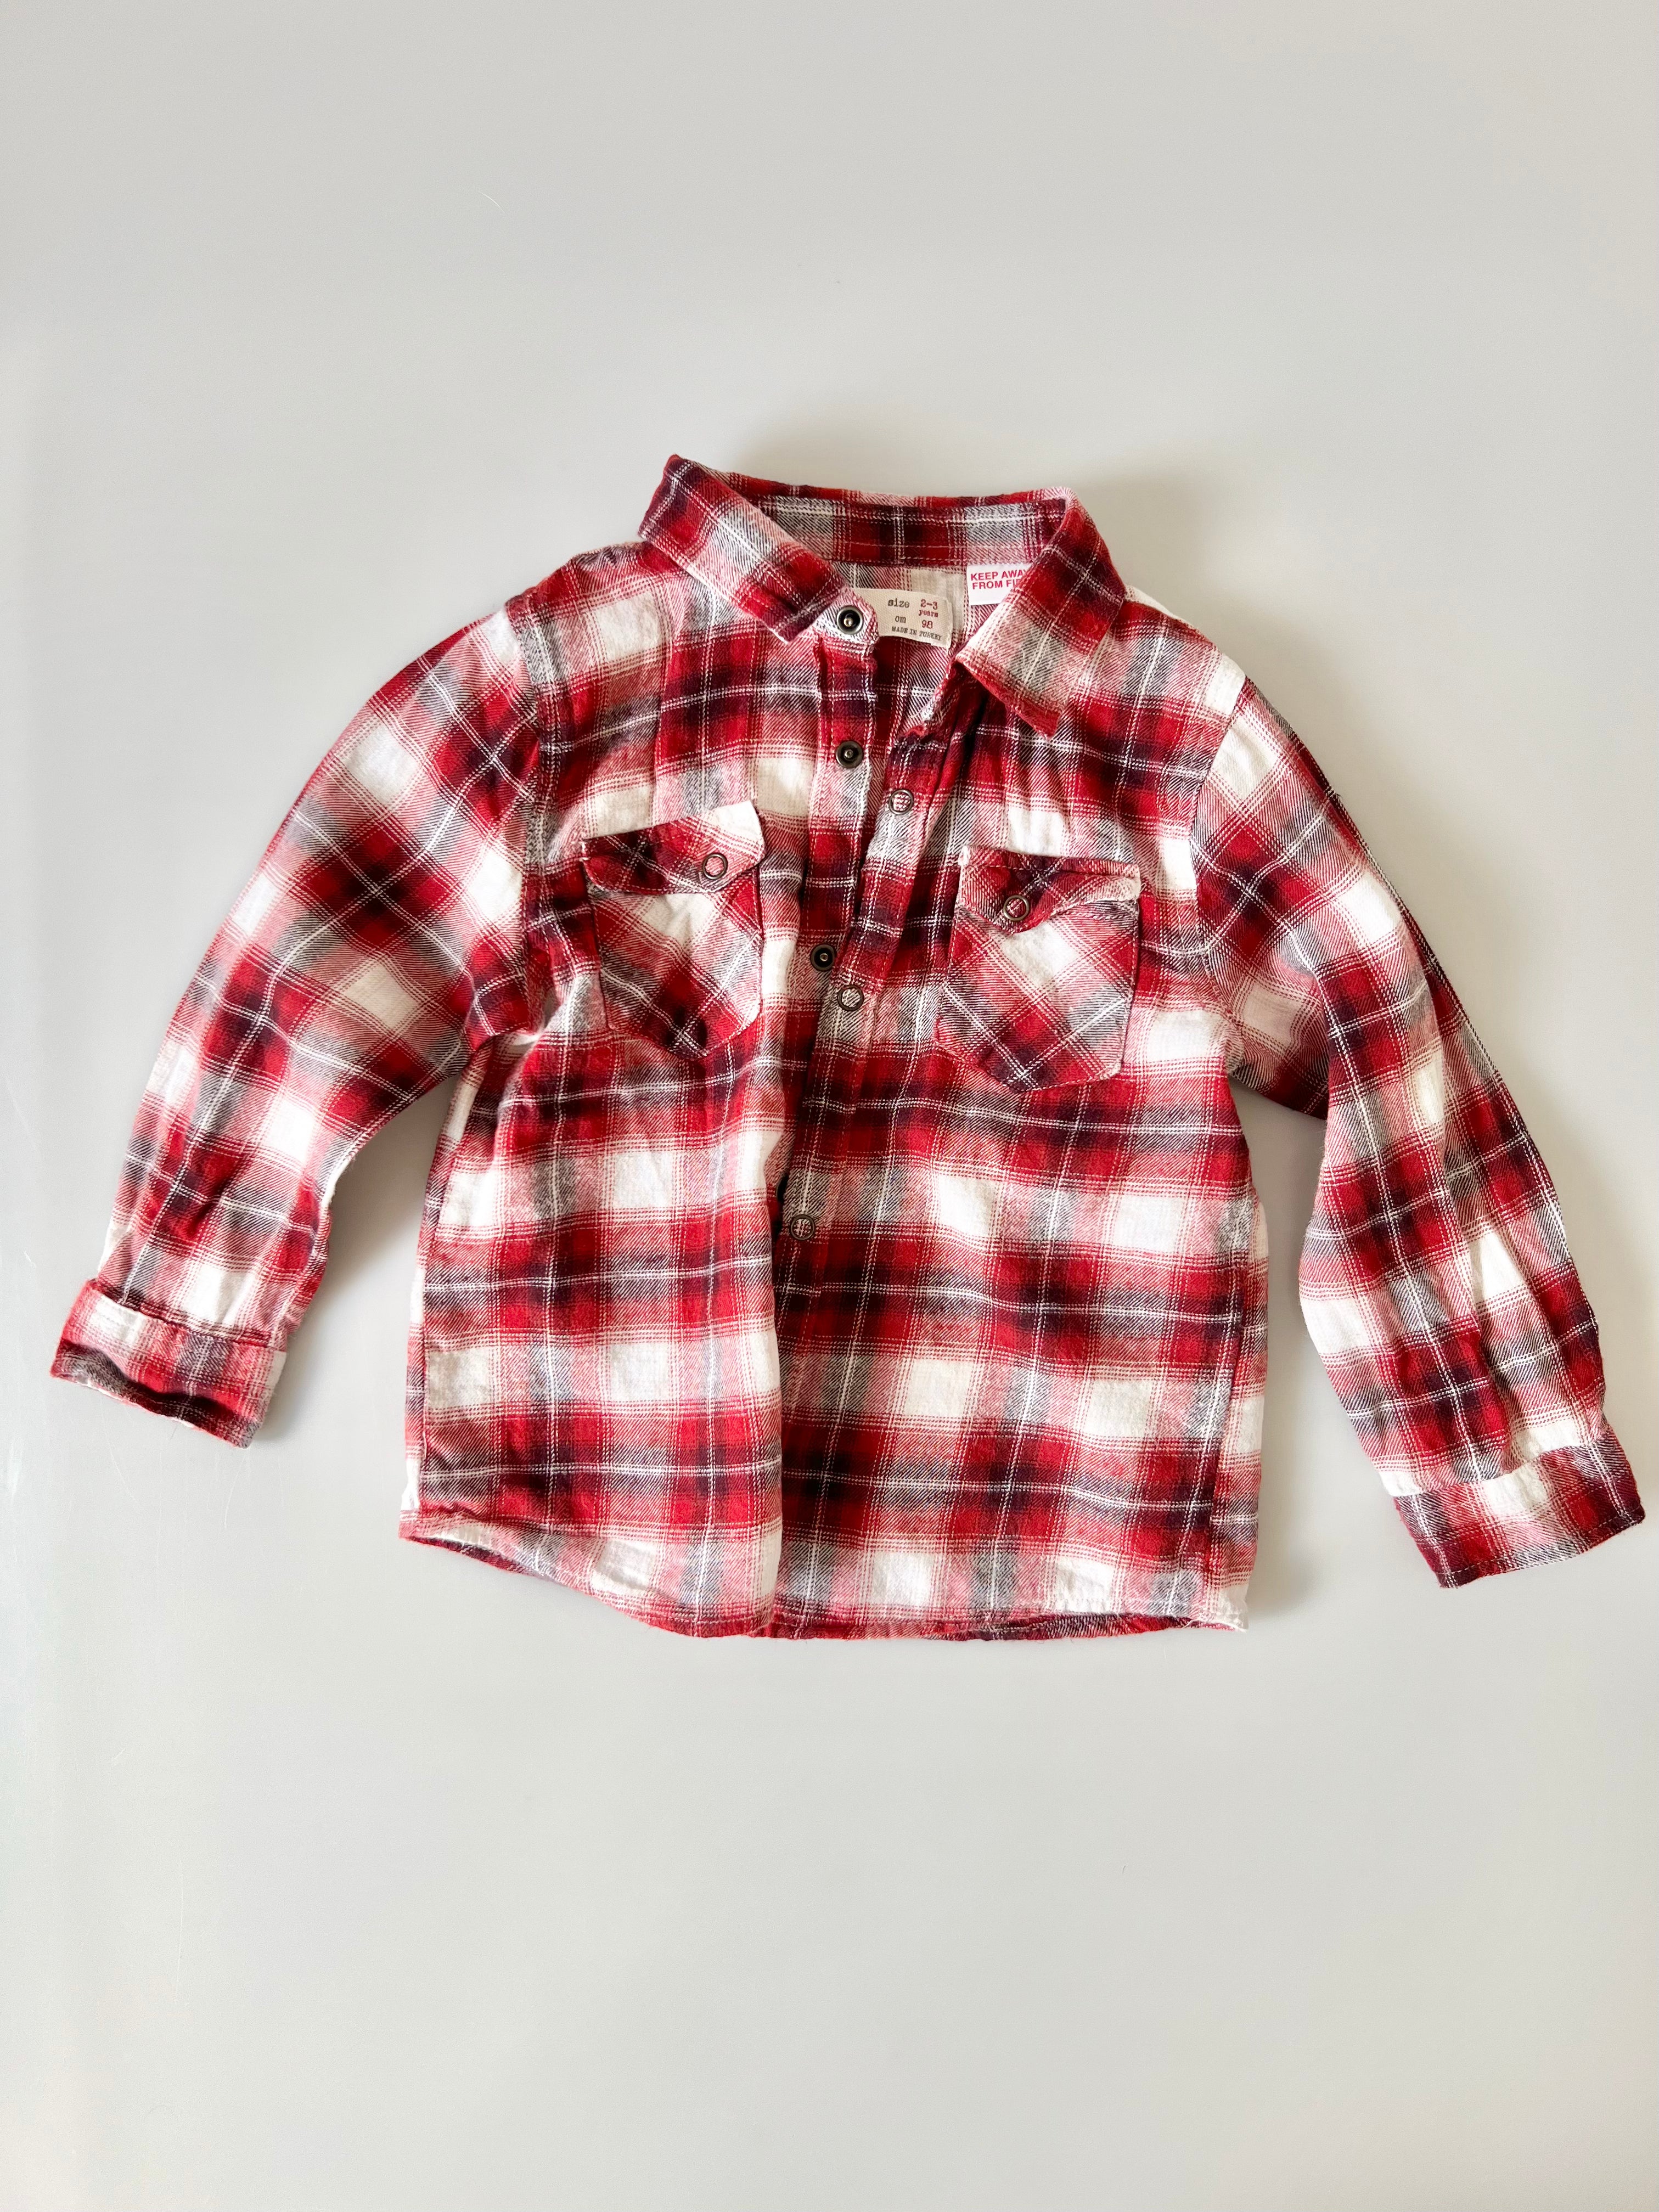 Zara Red Check Shirt Age 2-3